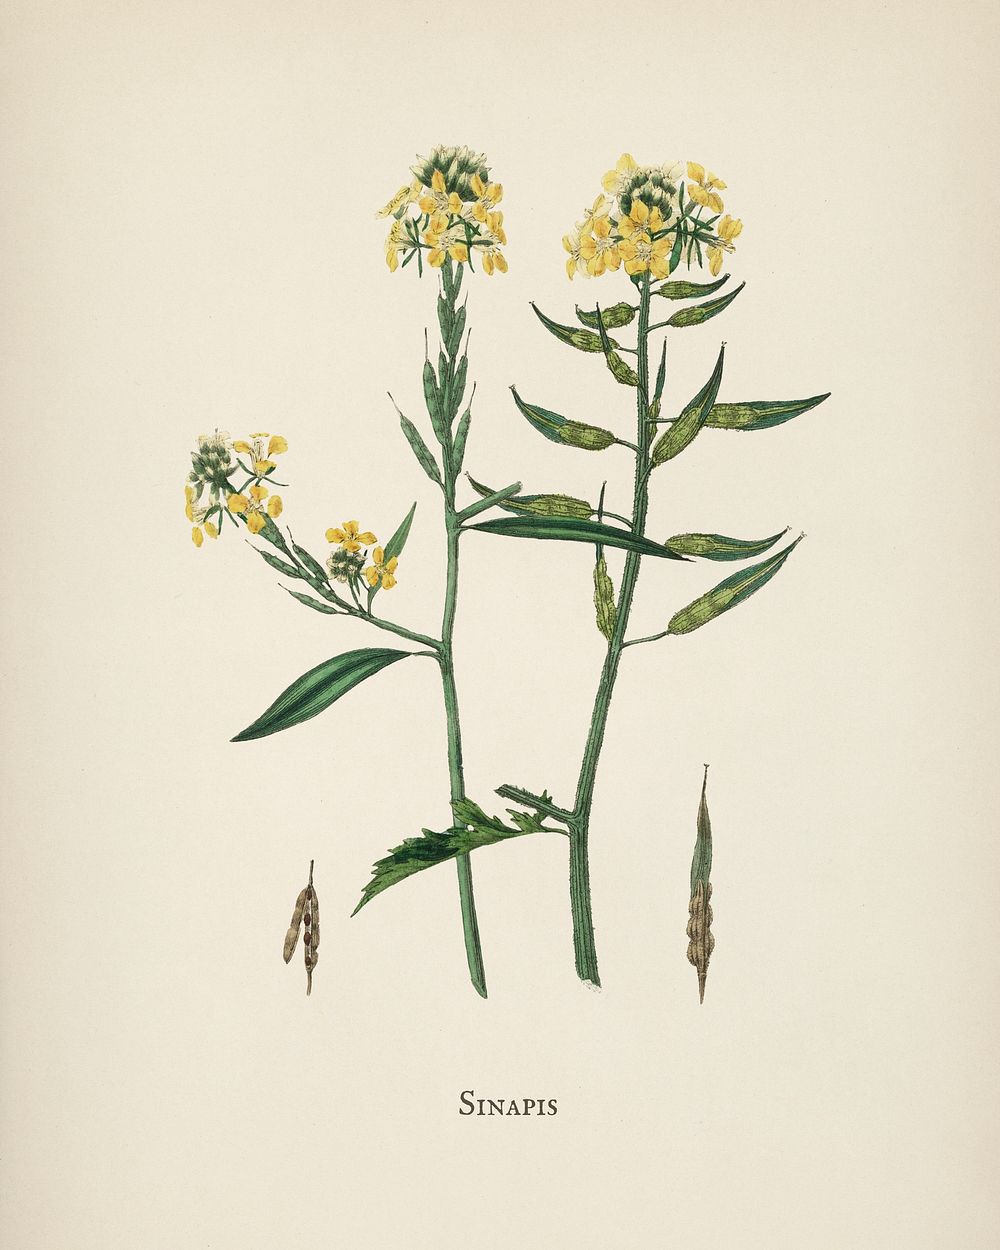 Mustard (Sinapis) illustration from Medical Botany (1836) by John Stephenson and James Morss Churchill.